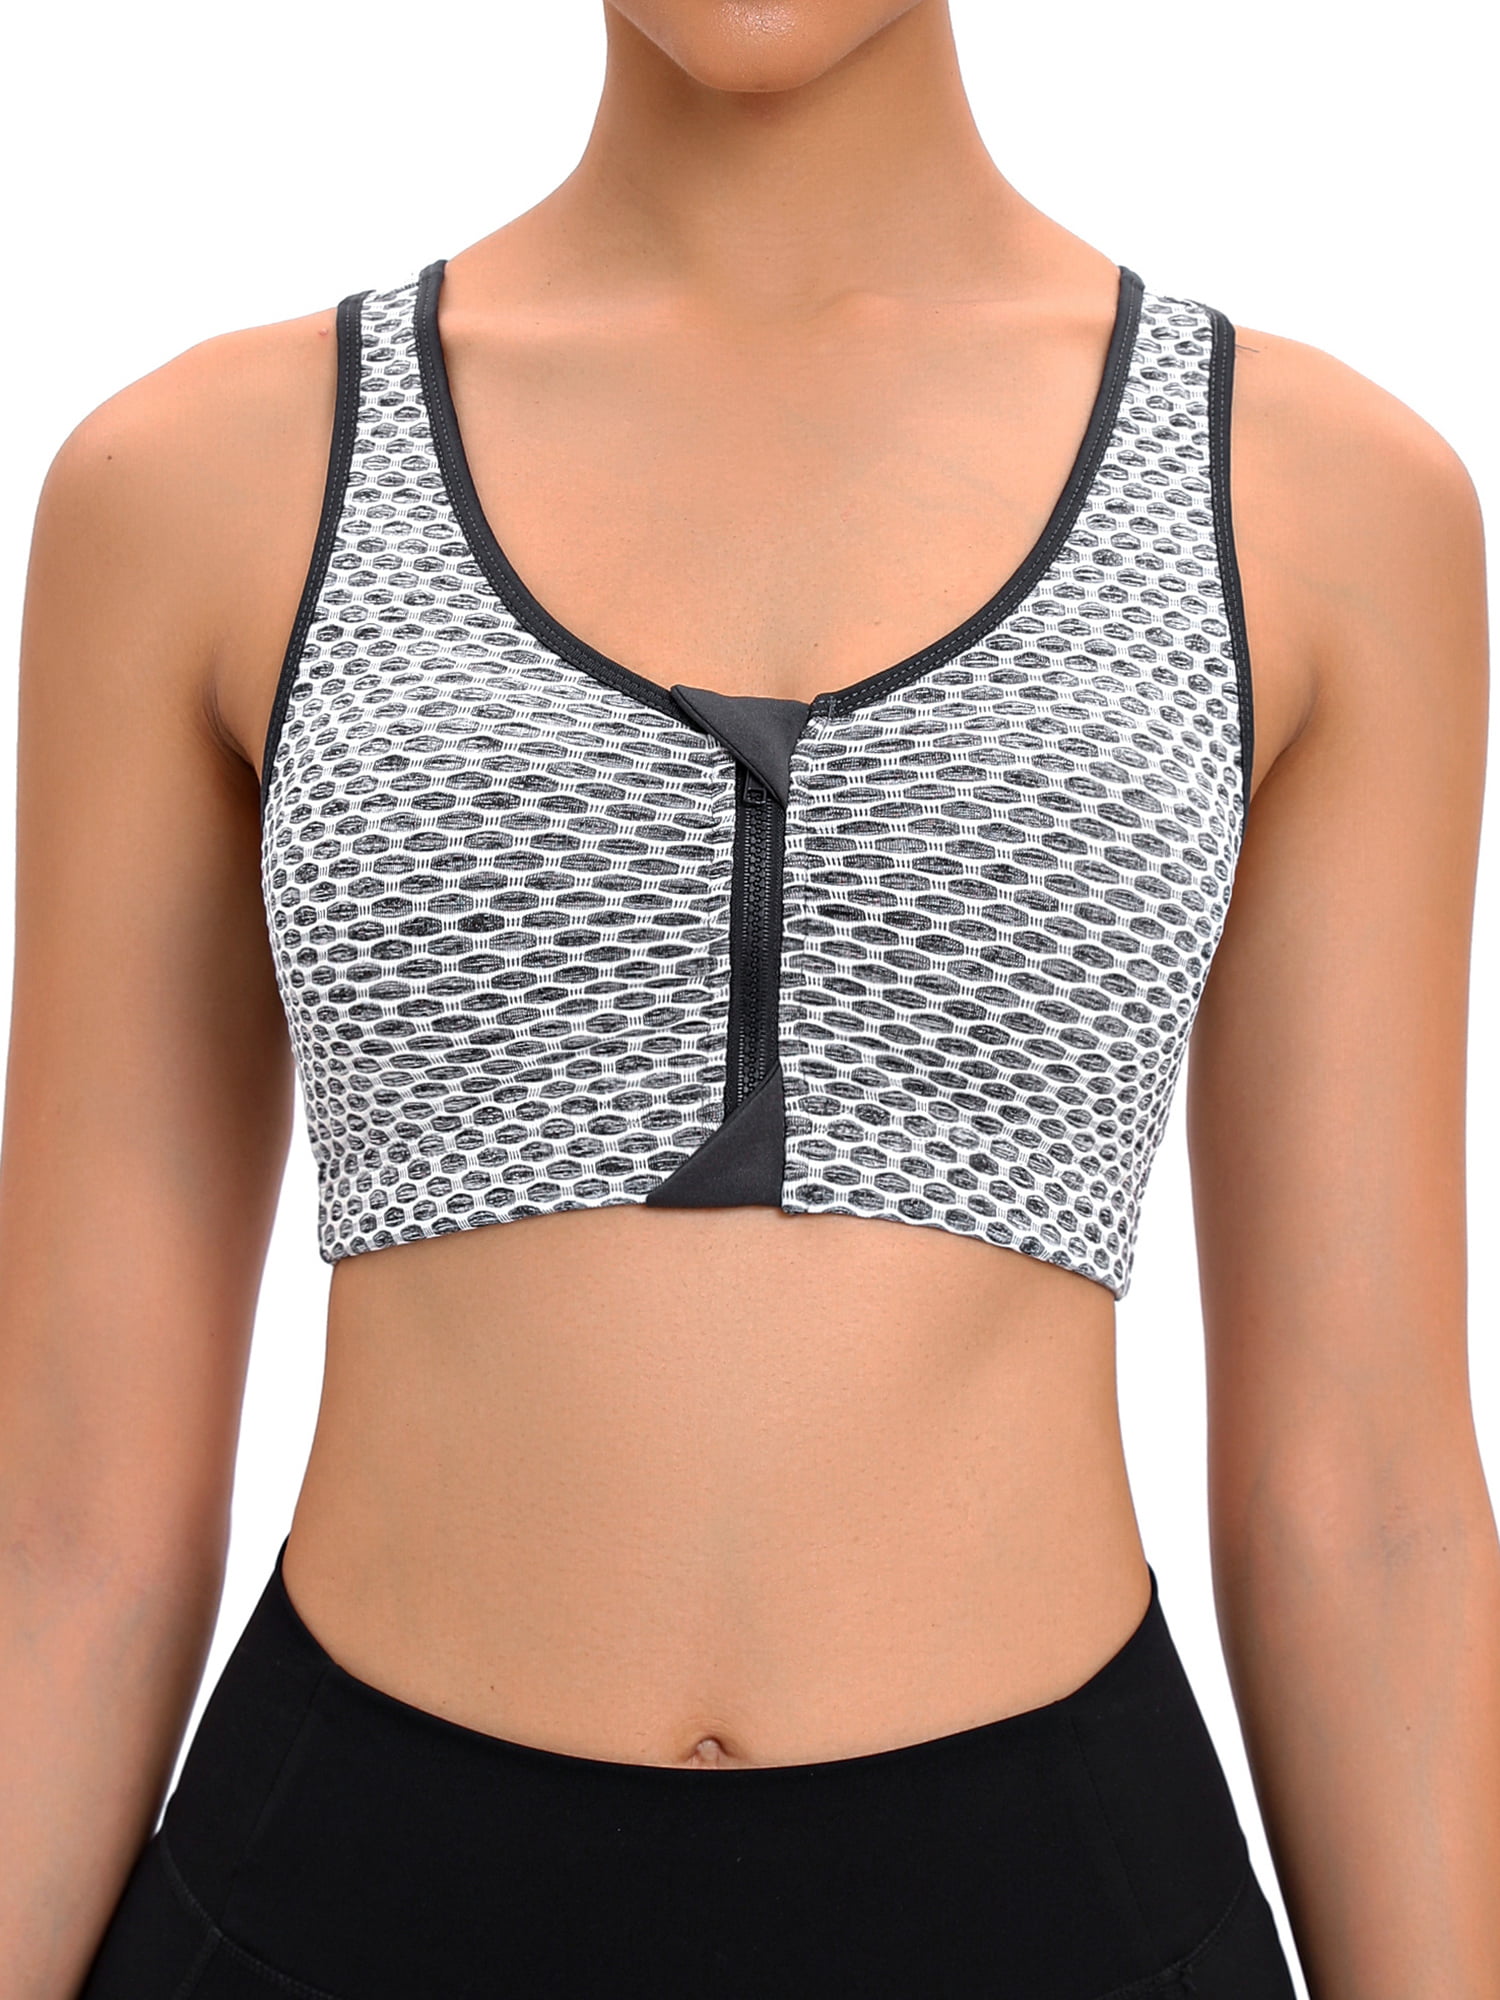 FOCUSSEXY Front Zipper Sports Bra for Women, Wireless Post-Op Bra Active  Yoga Sports Bra Sports Bra Front Closure